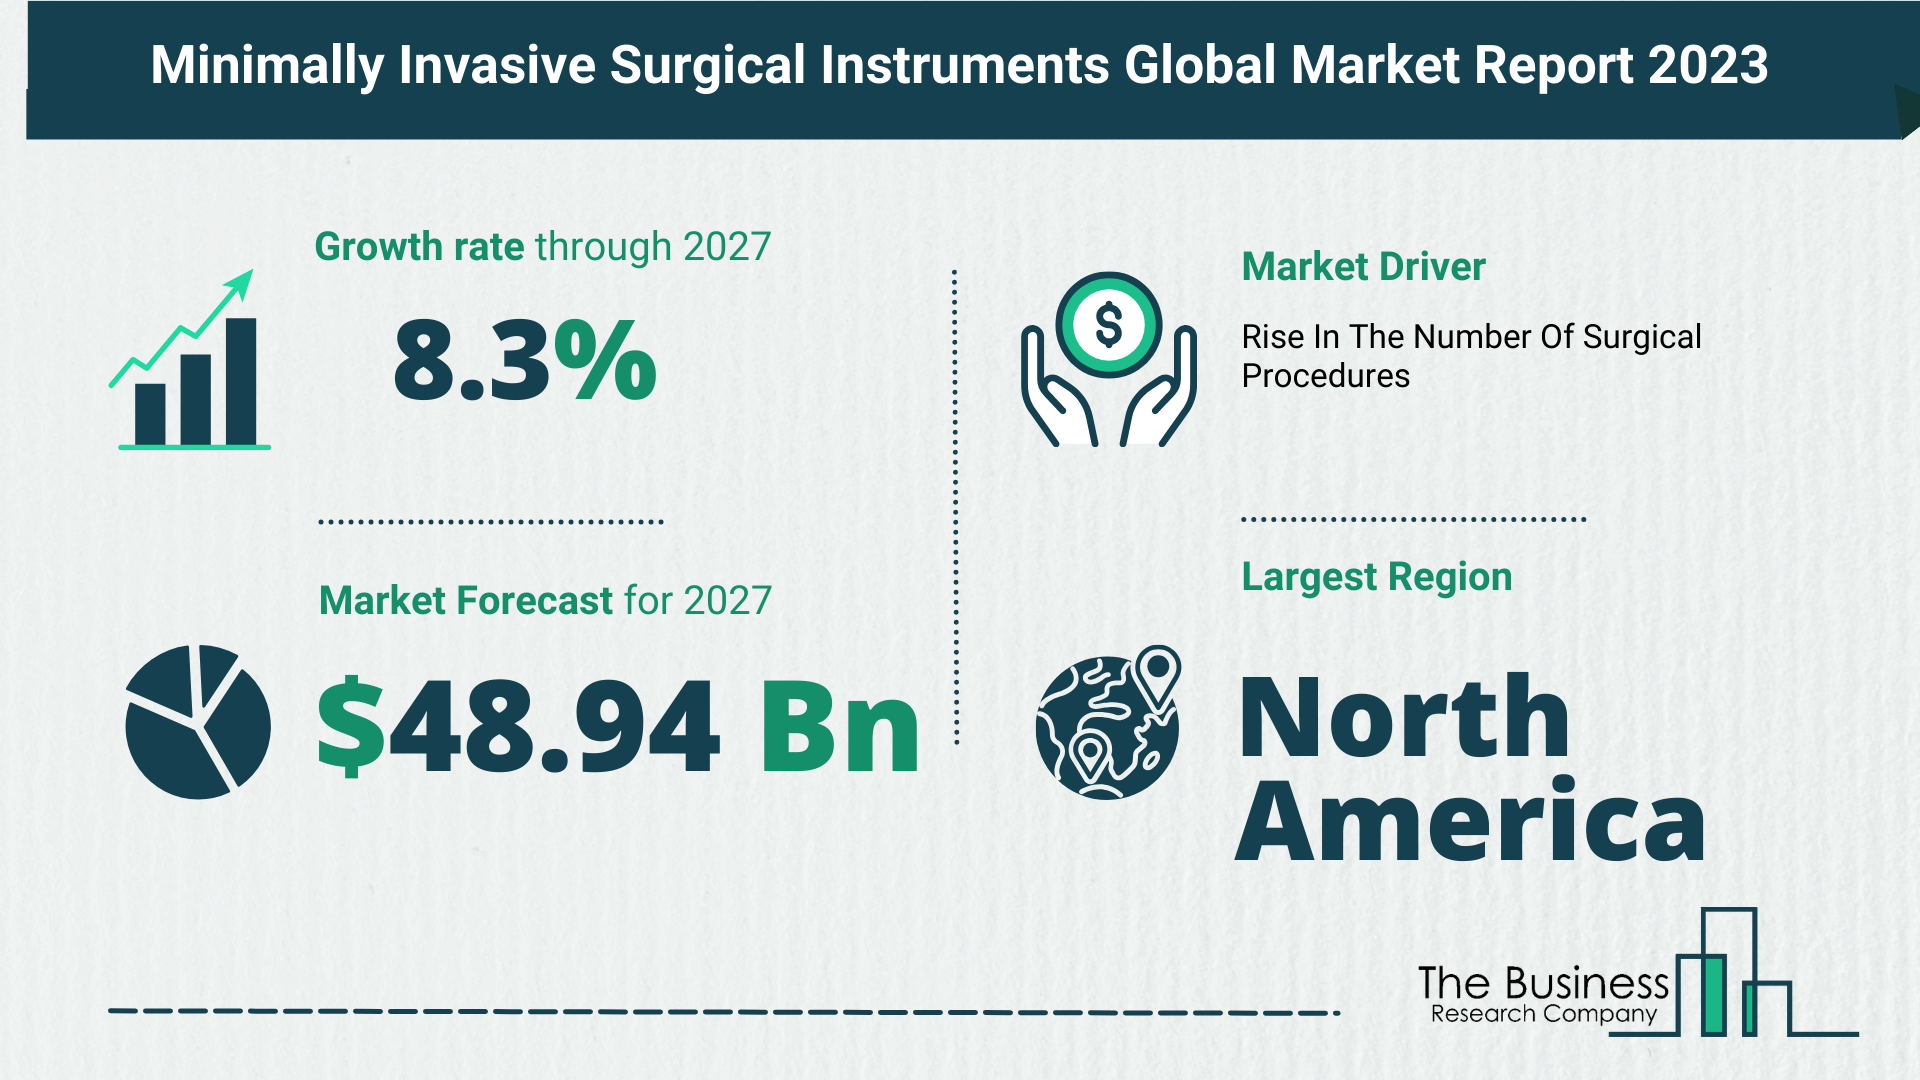 Global Minimally Invasive Surgical Instruments Market